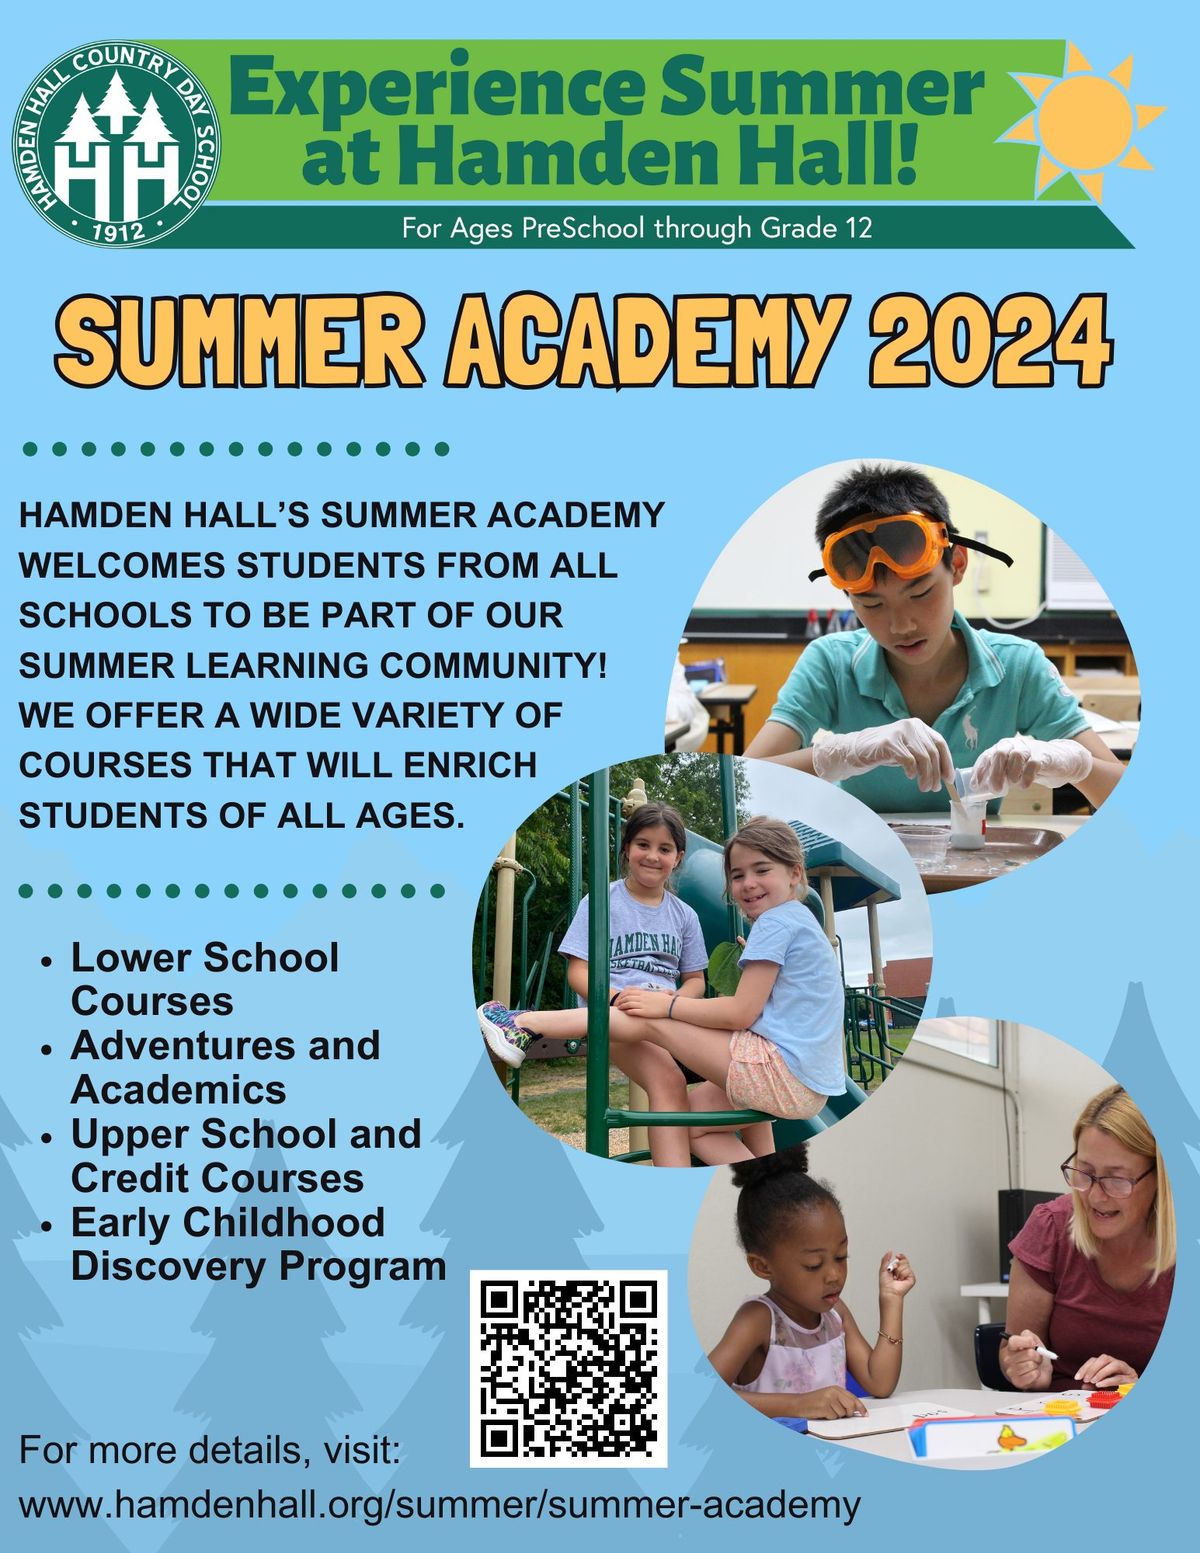 Hamden Hall's Summer Academy 